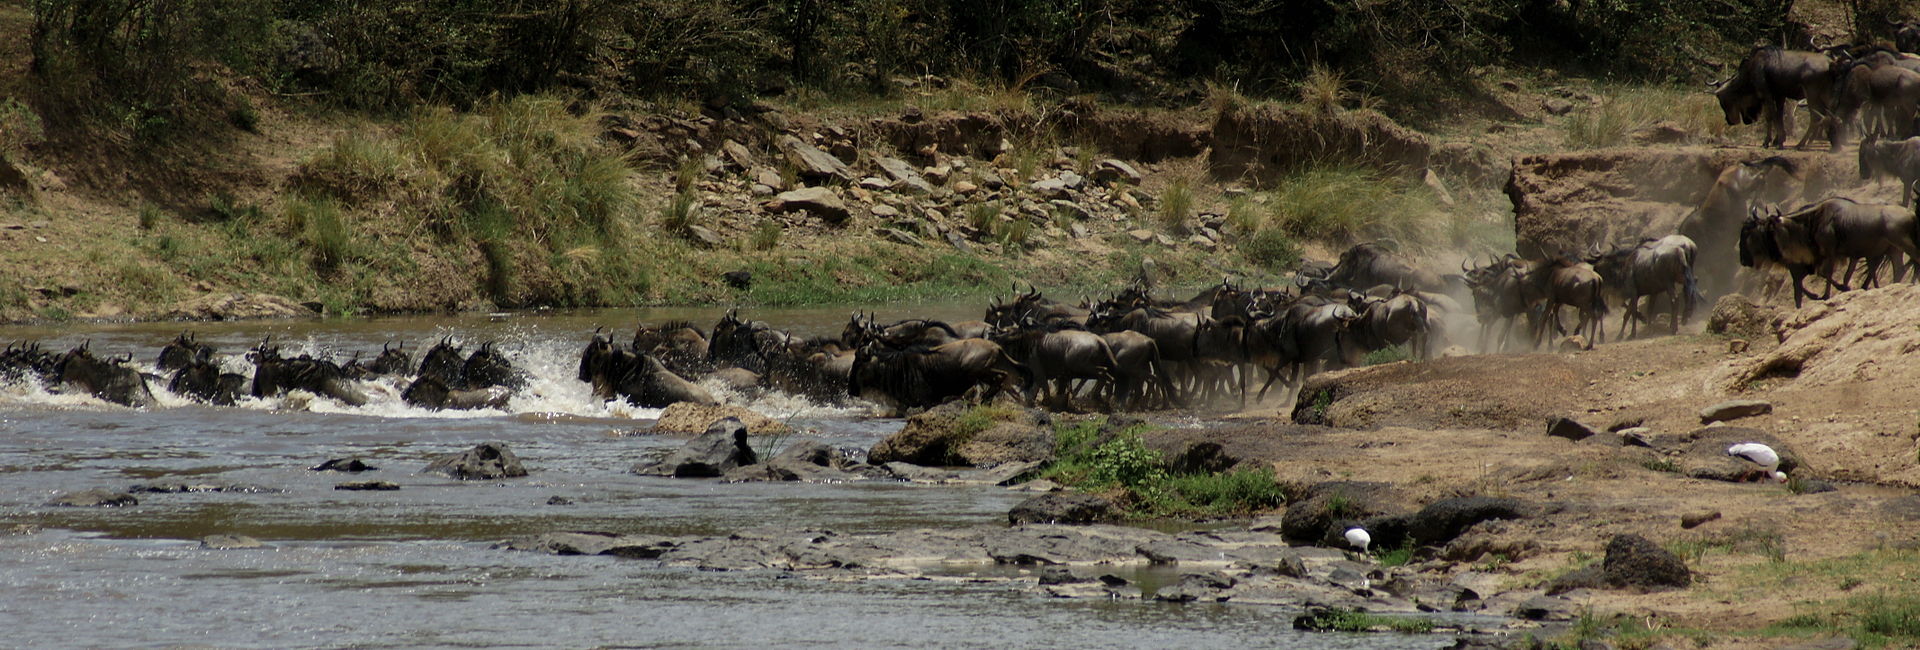 Gnus überqueren den Mara (c) Fiver Lücker CC BY SA 2.0